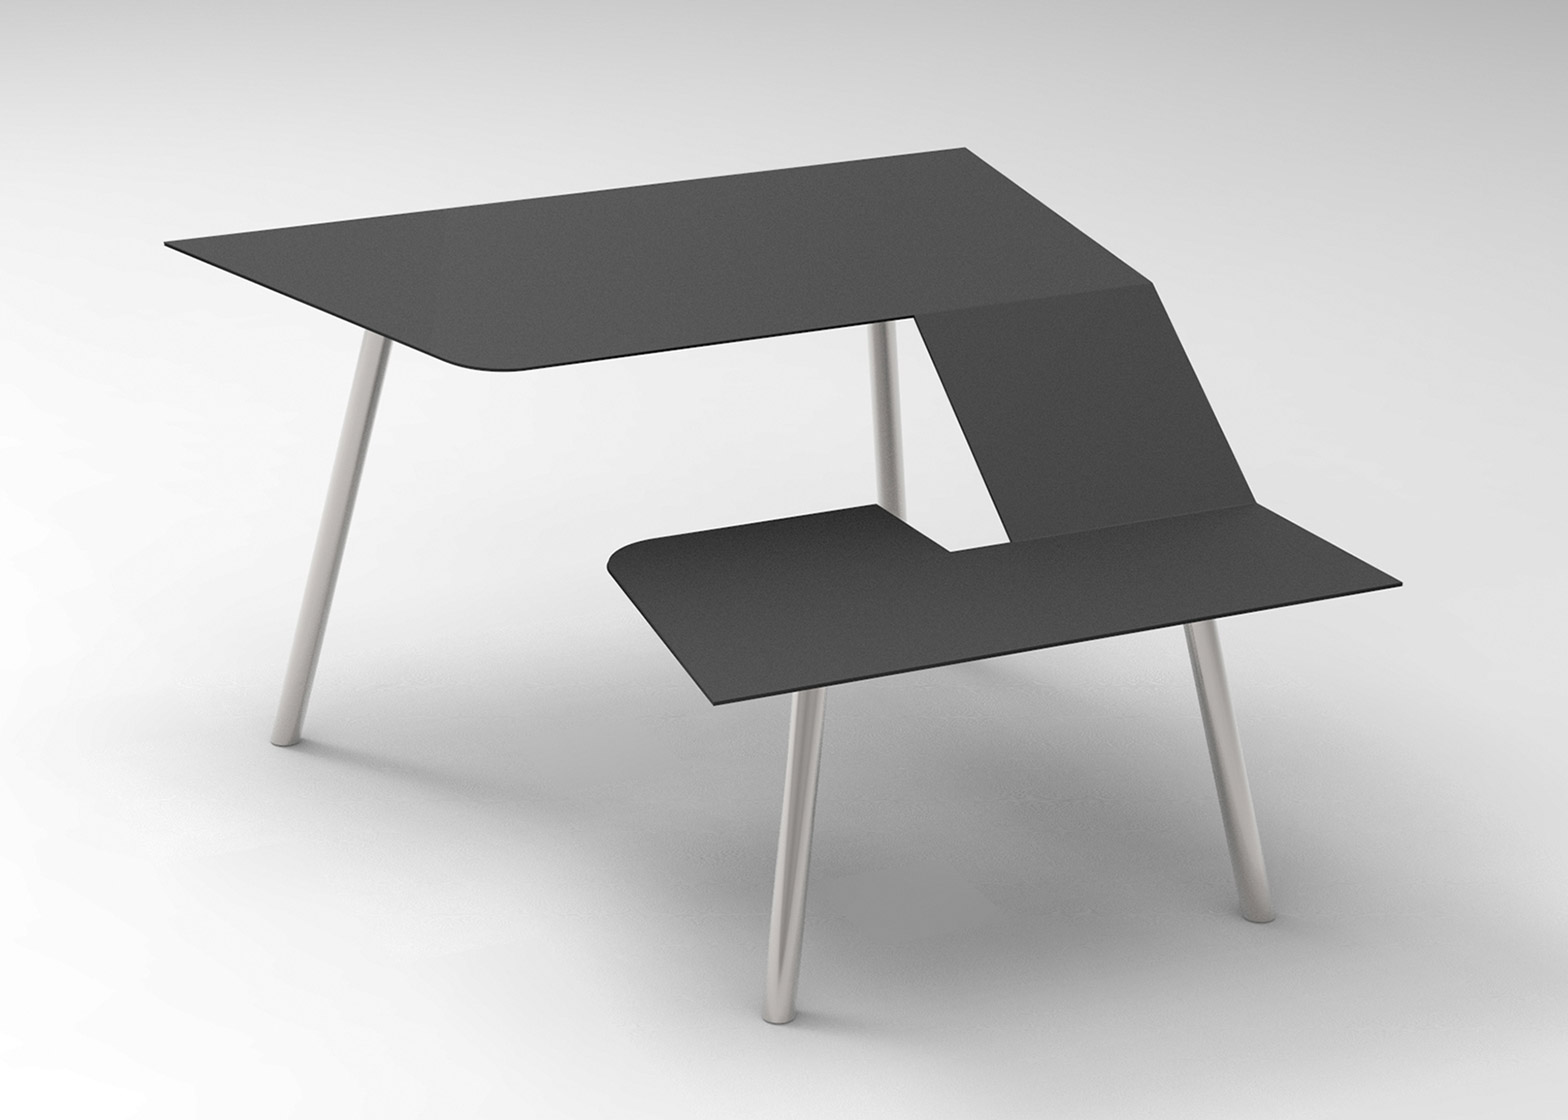 Frans Willigers Addresses Useless Work Furniture With Hybrid Desk